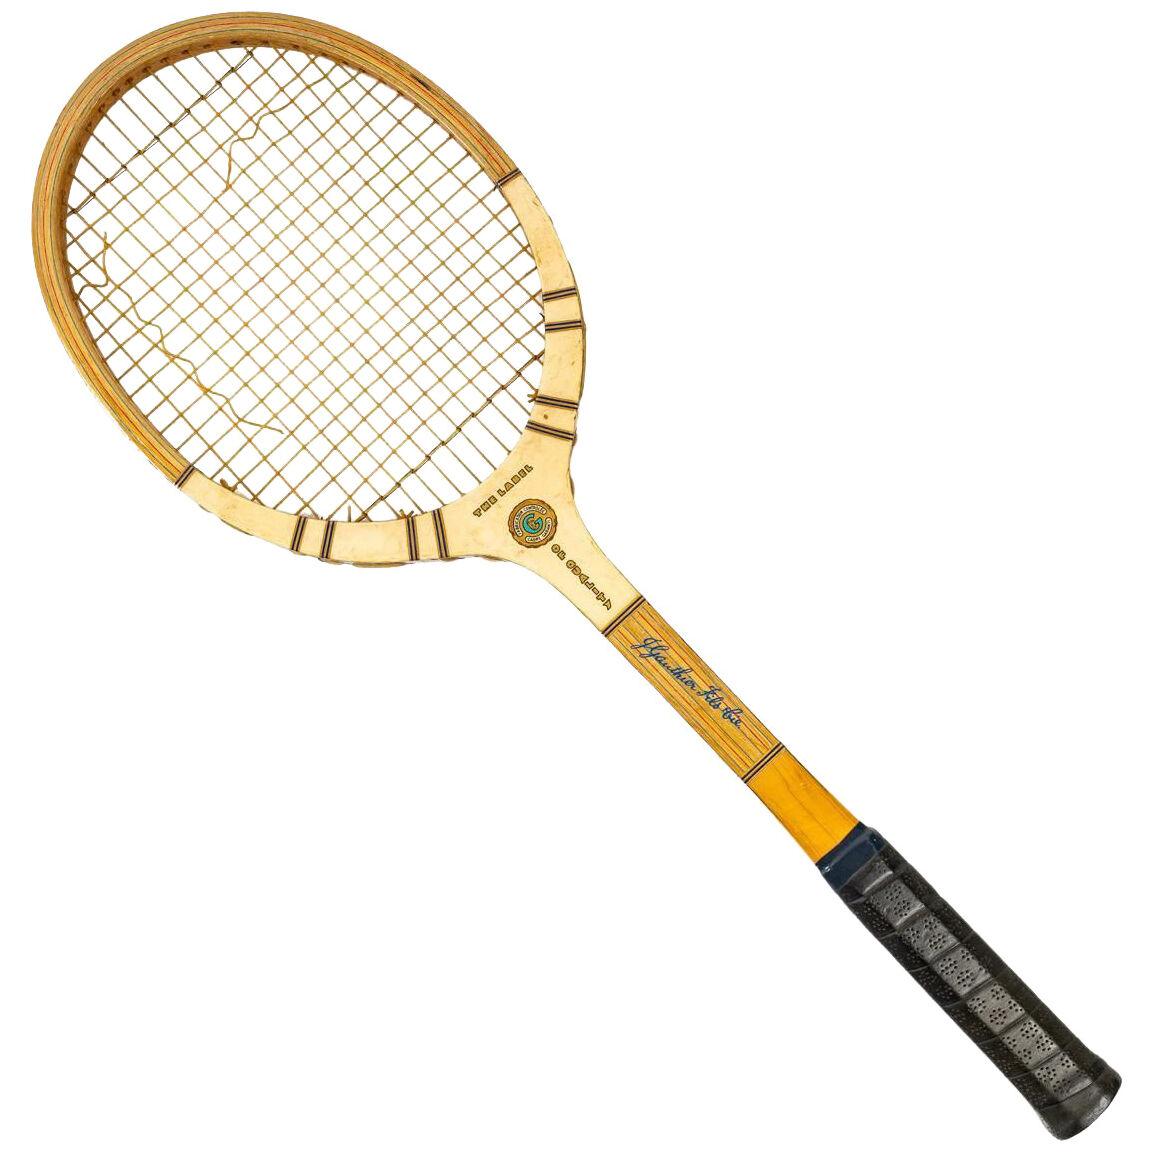 Atlas tennis racket, For Championship Play